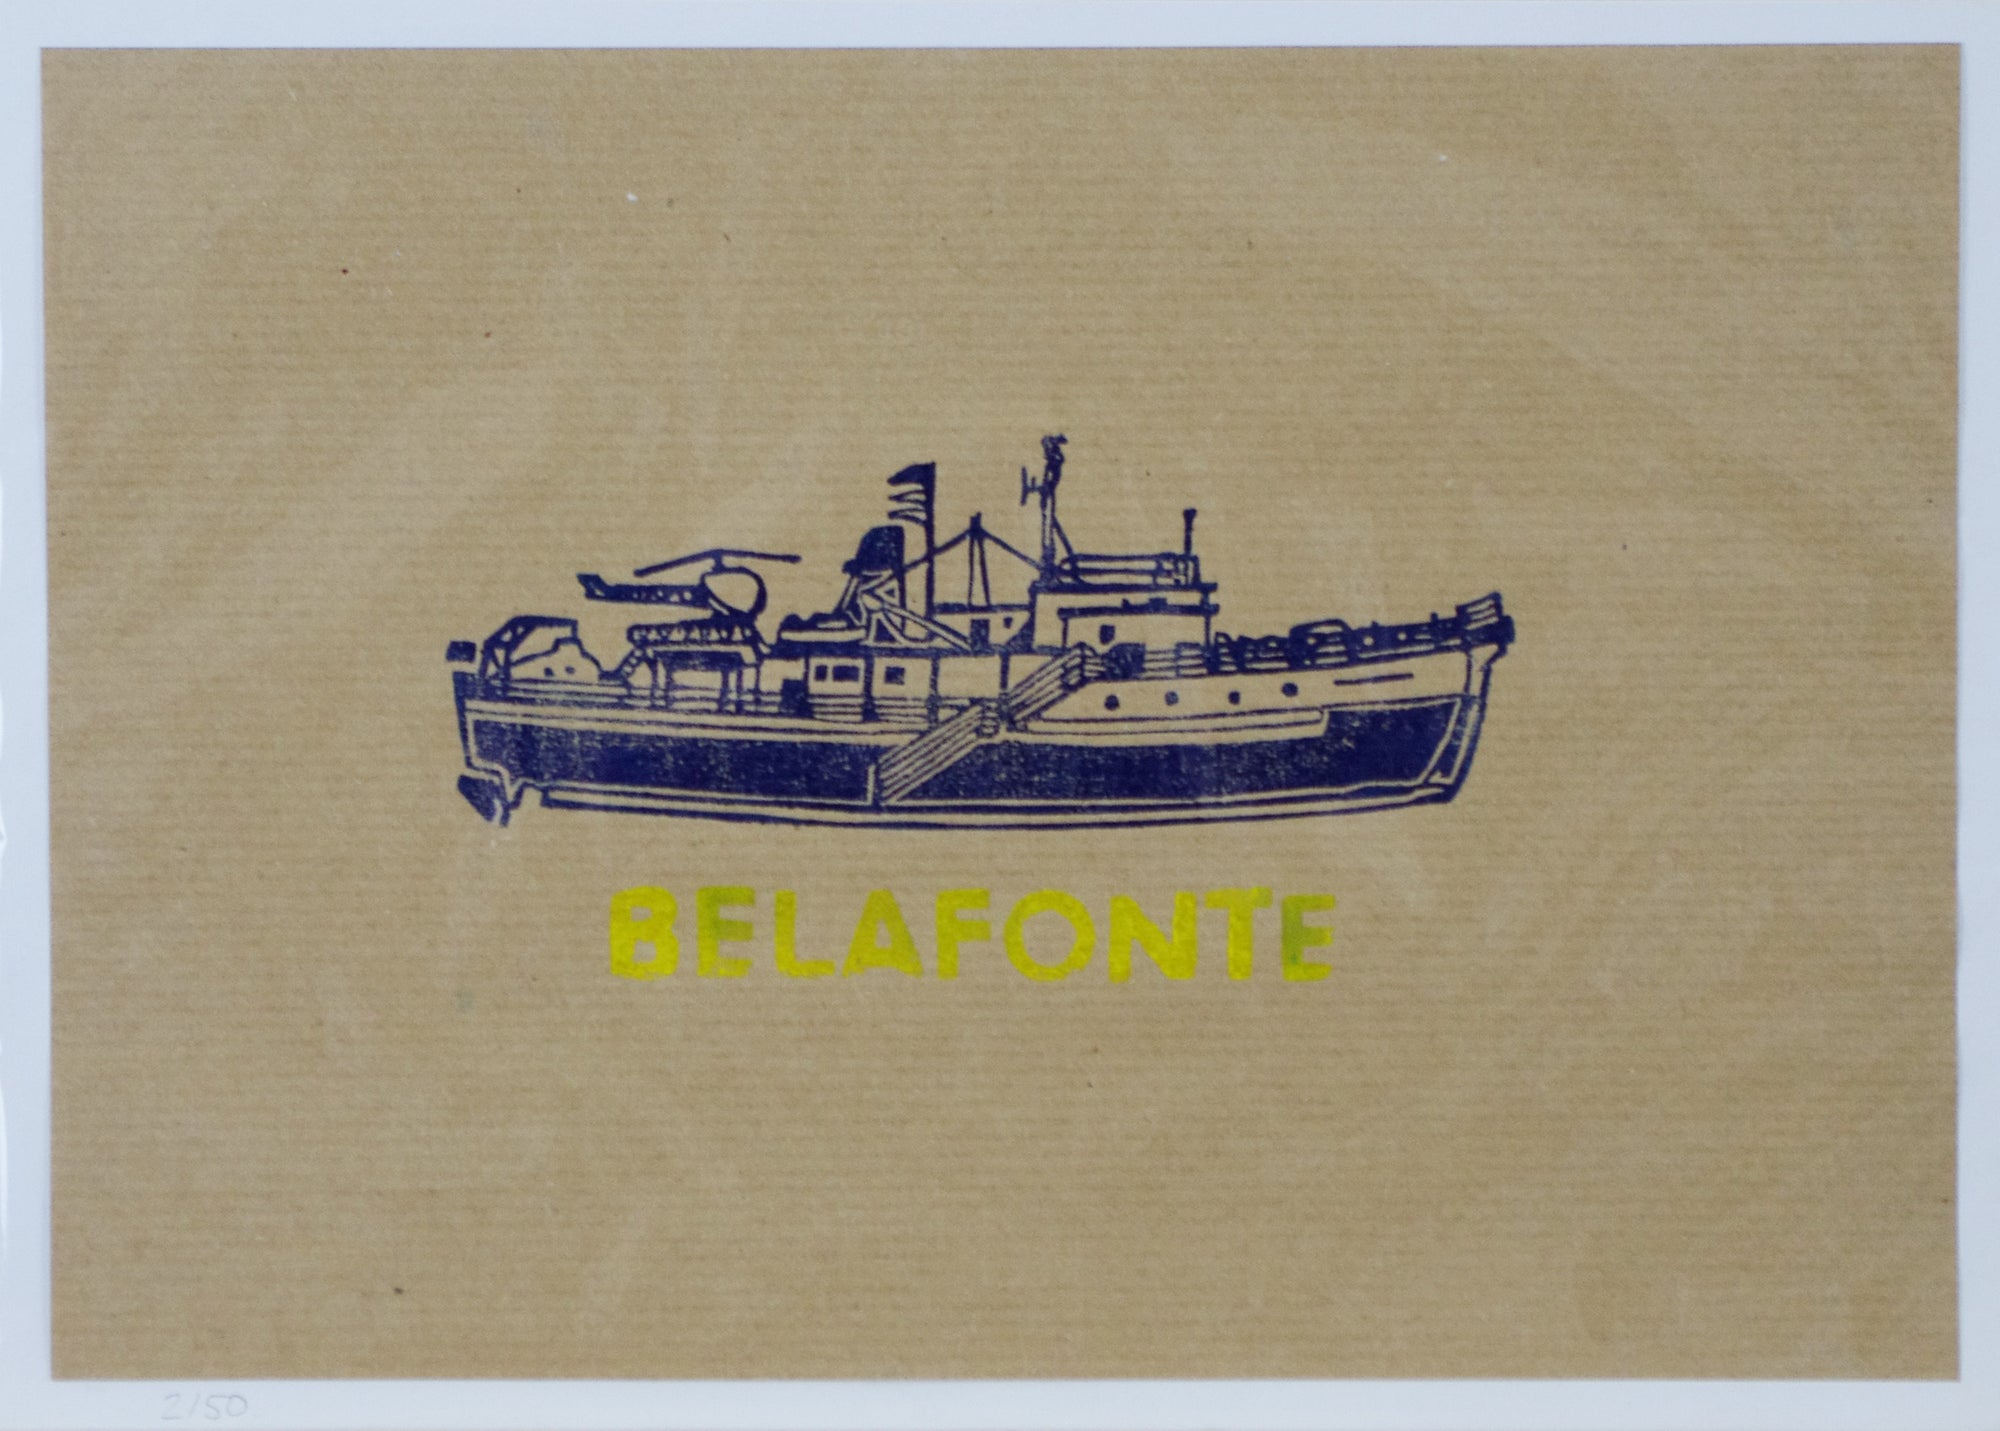 RattyCatCat - Belafonte (The Life Aquatic)